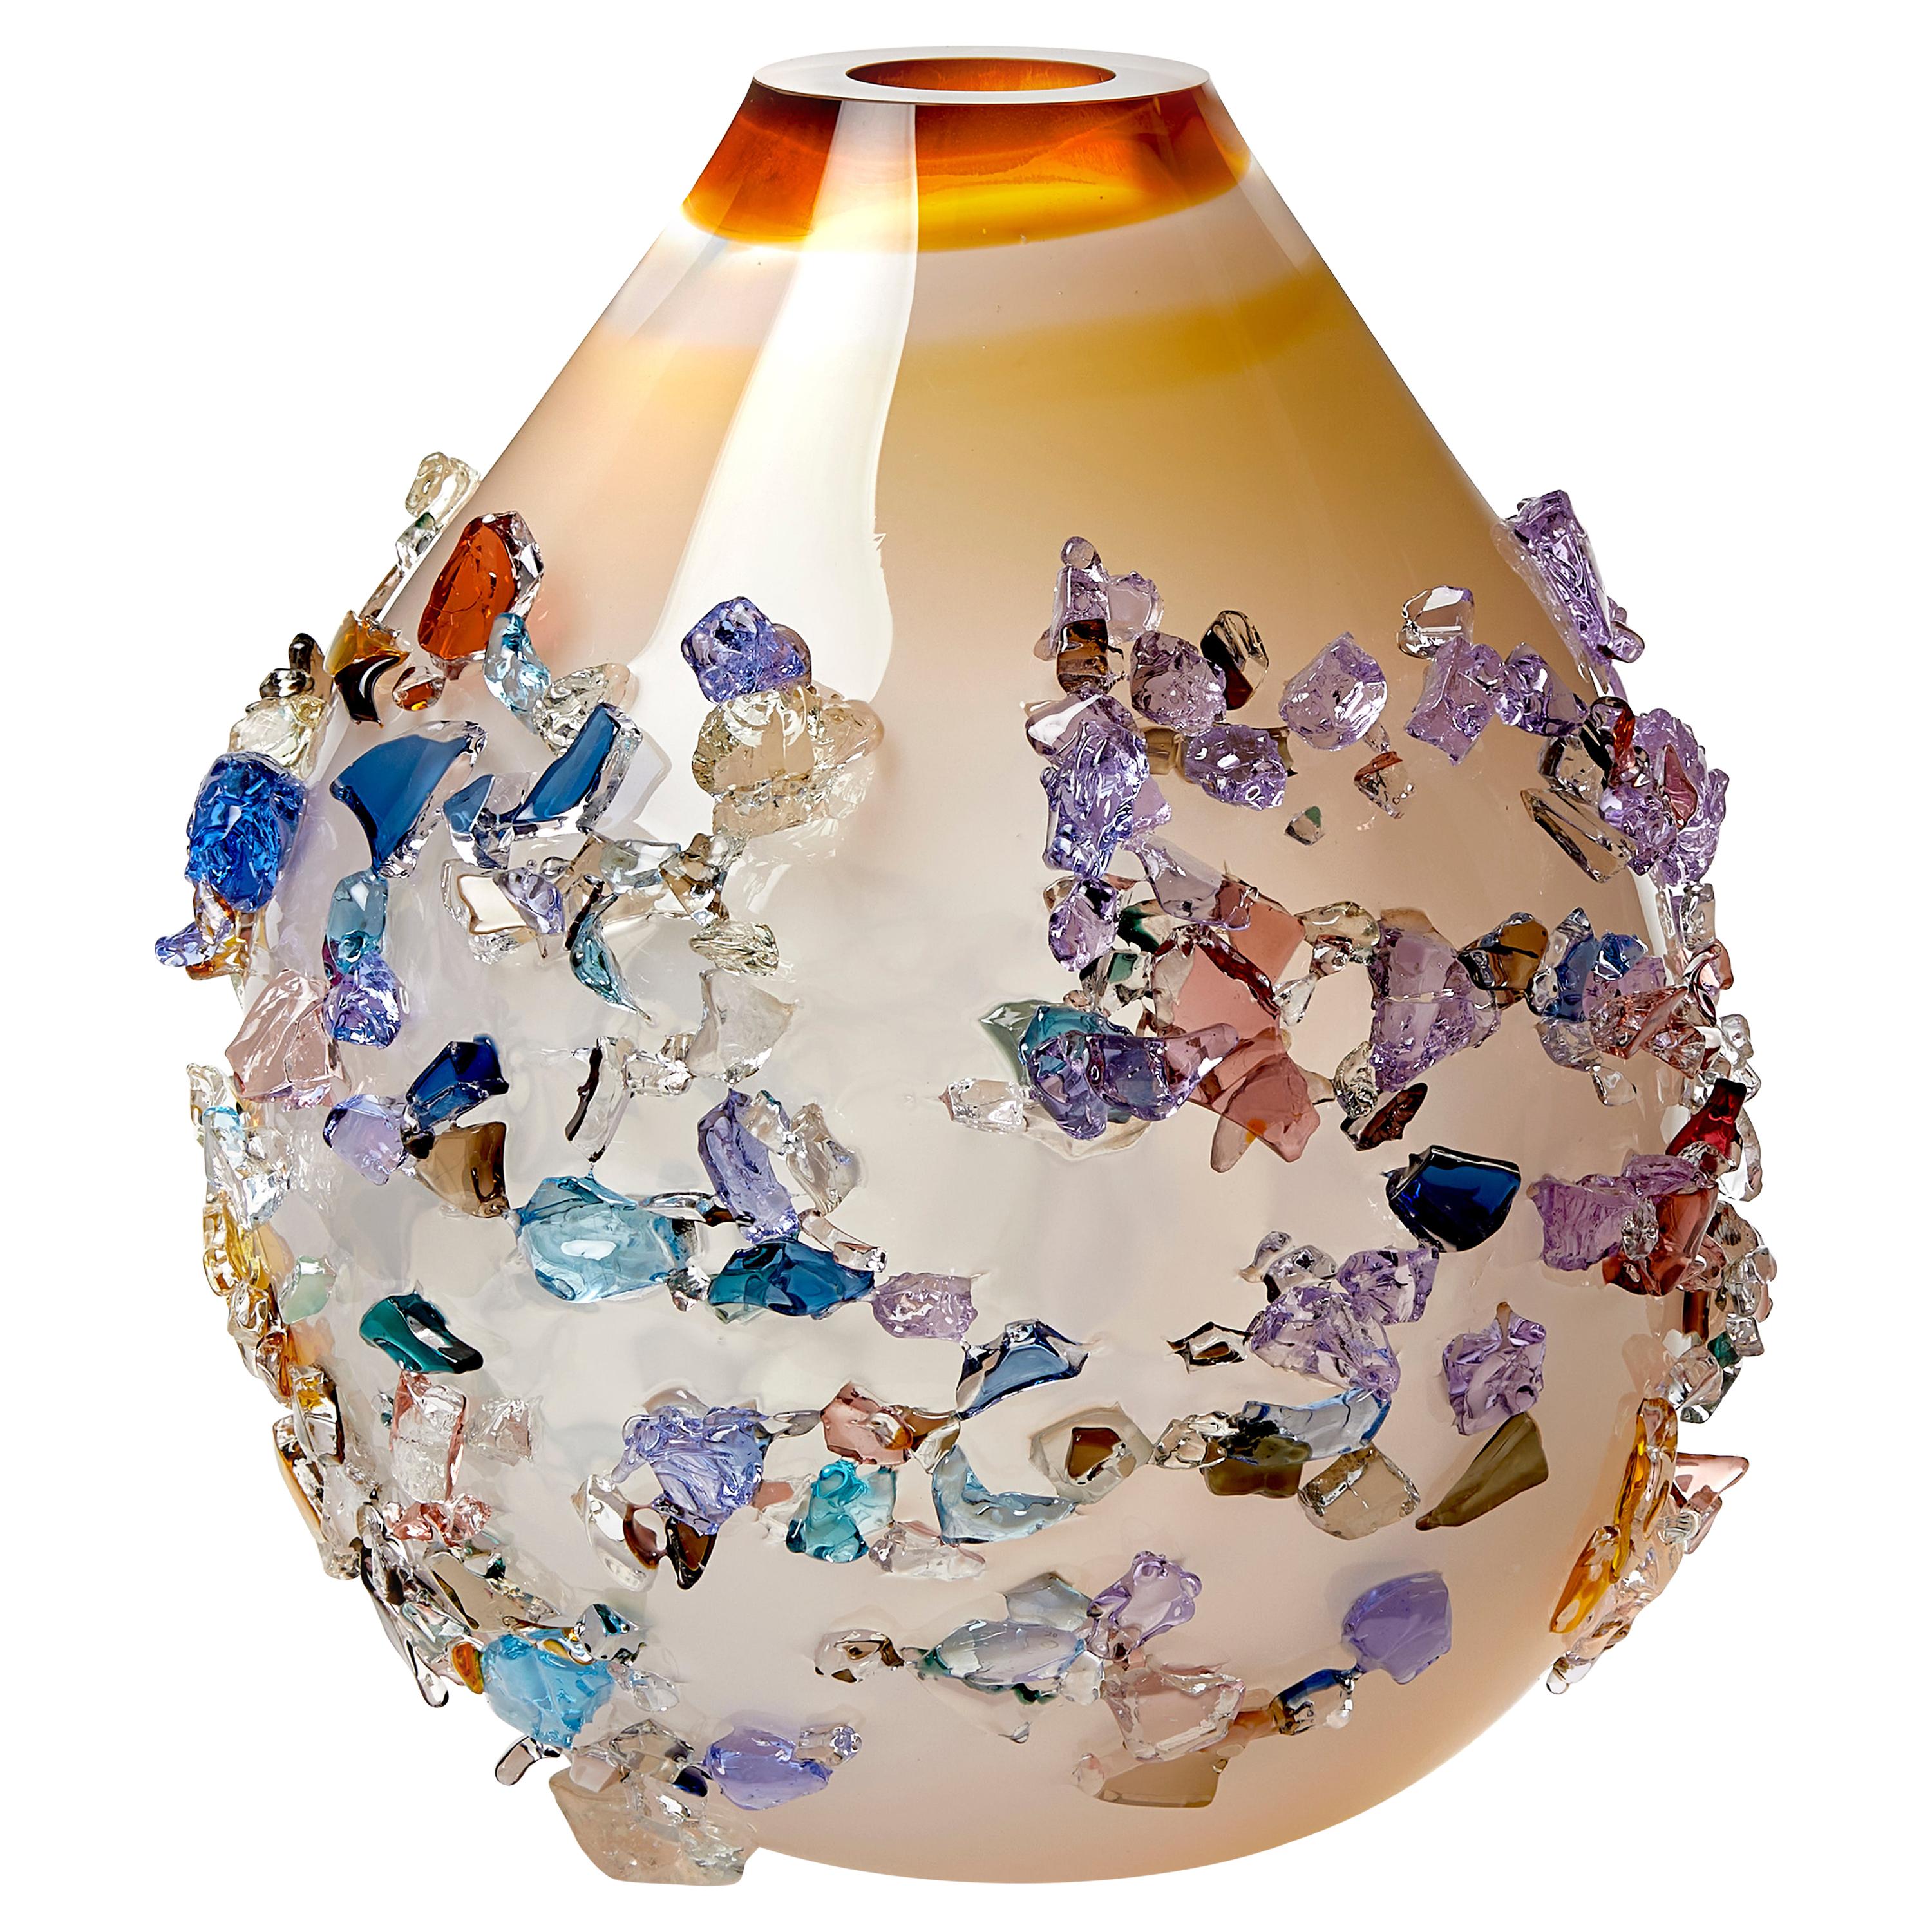 Sakura TRP20010, a Glass Vase in Warm White with Mixed Colors by Maarten Vrolijk